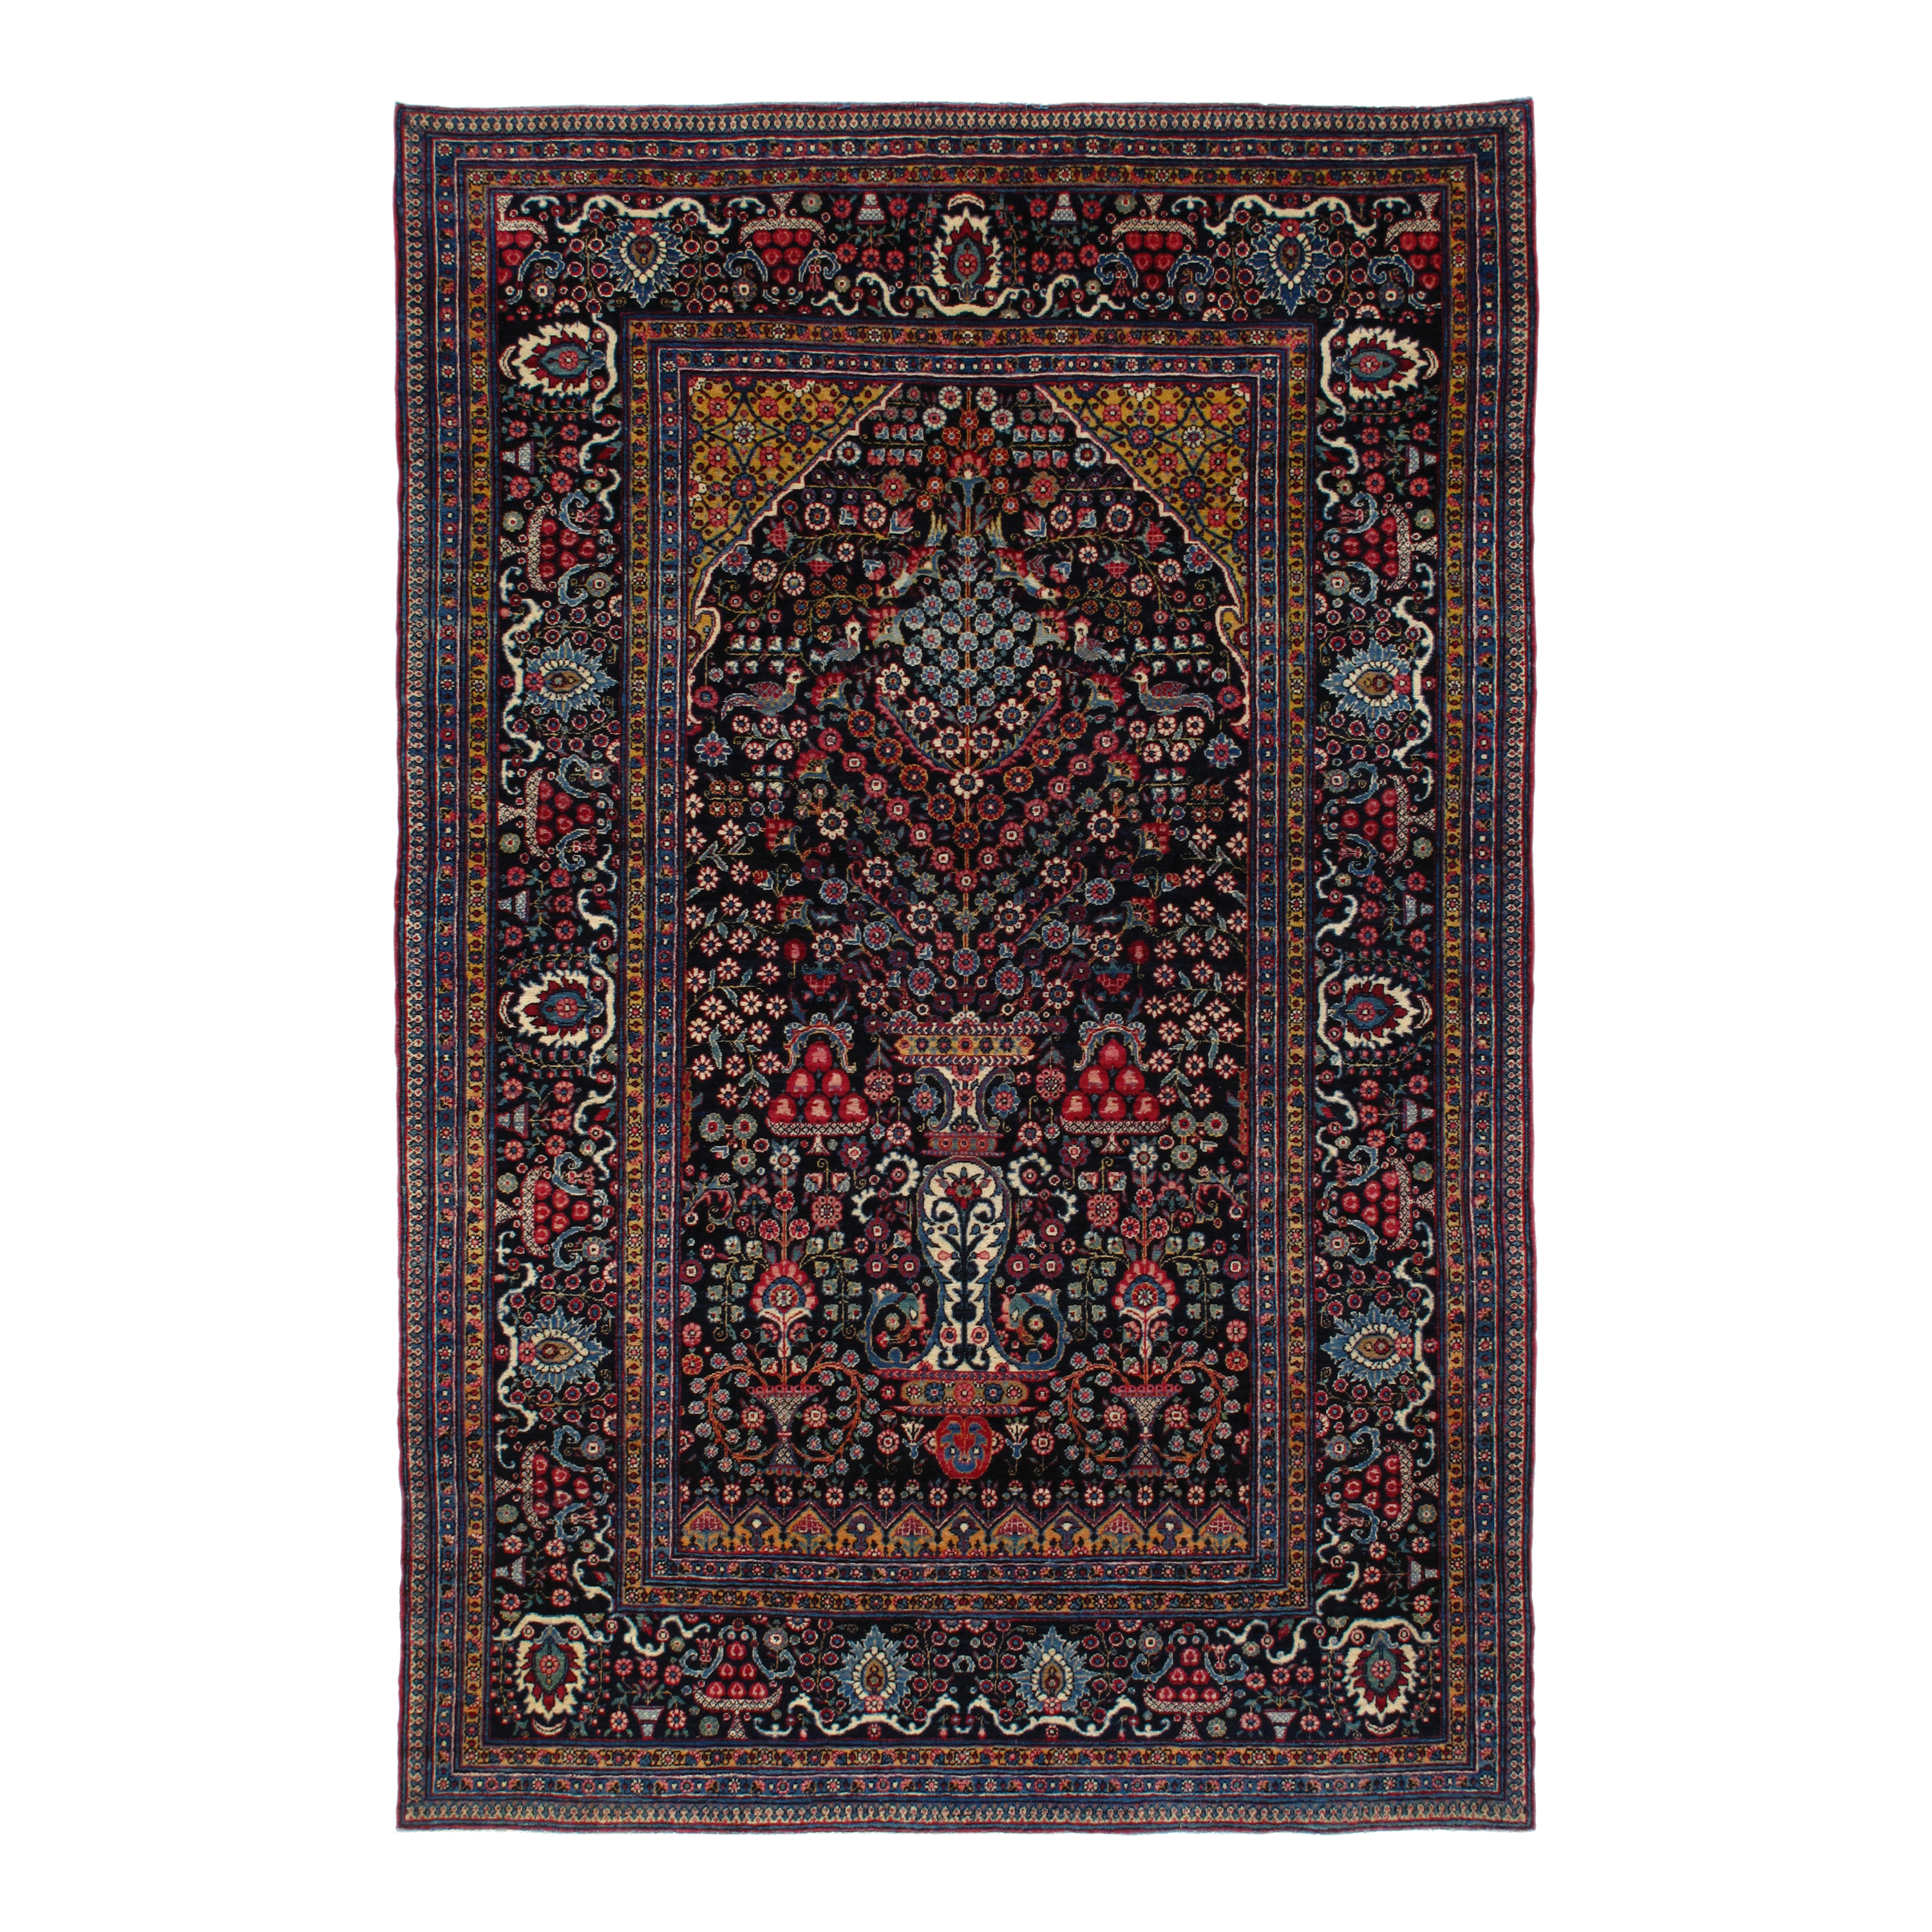 Antique Persian Tehran rug is made of 100% wool.